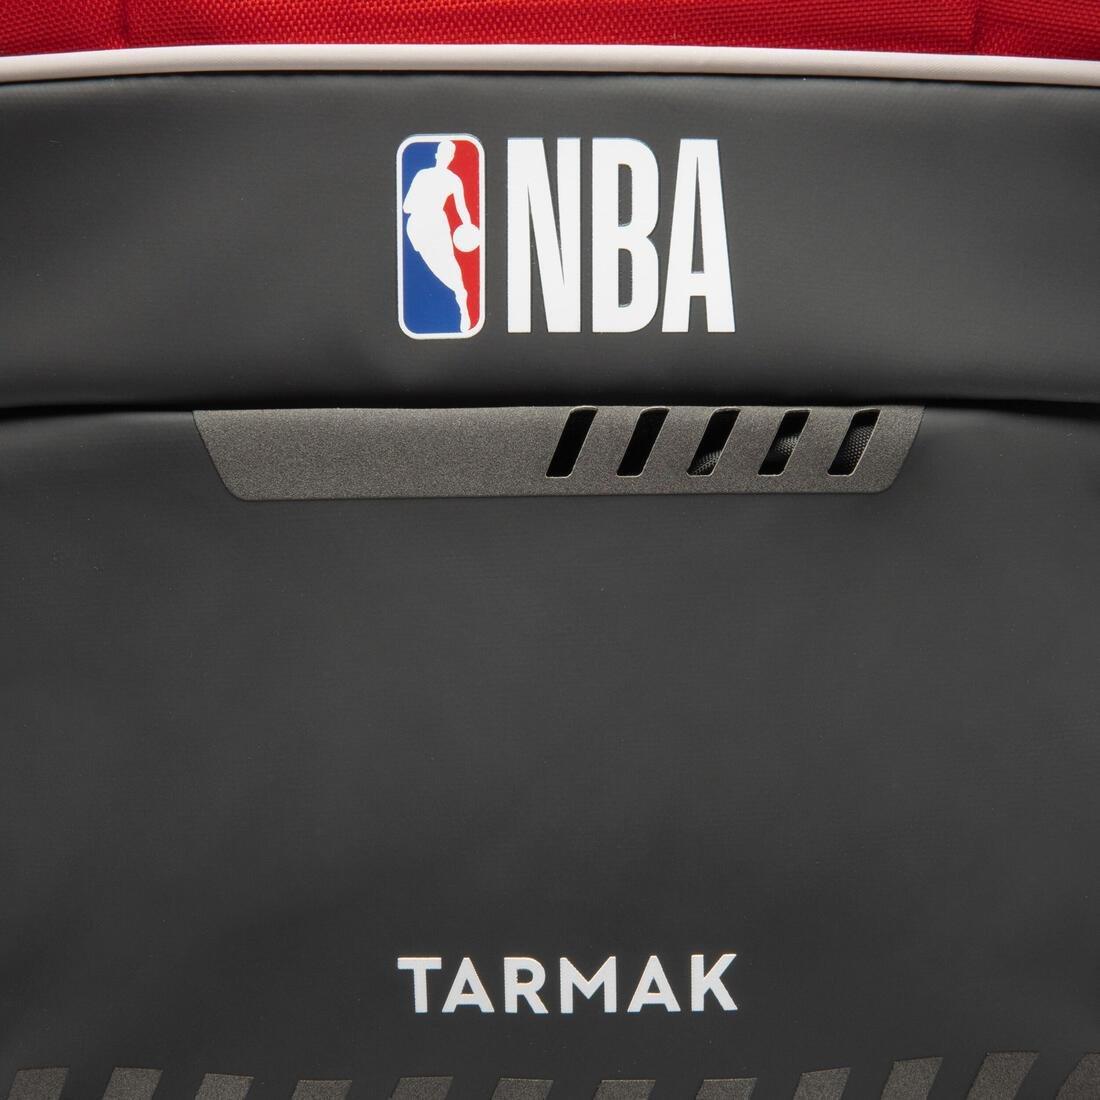 TARMAK - 25L Basketball Backpack - Chicago Bulls Nba 500, Red